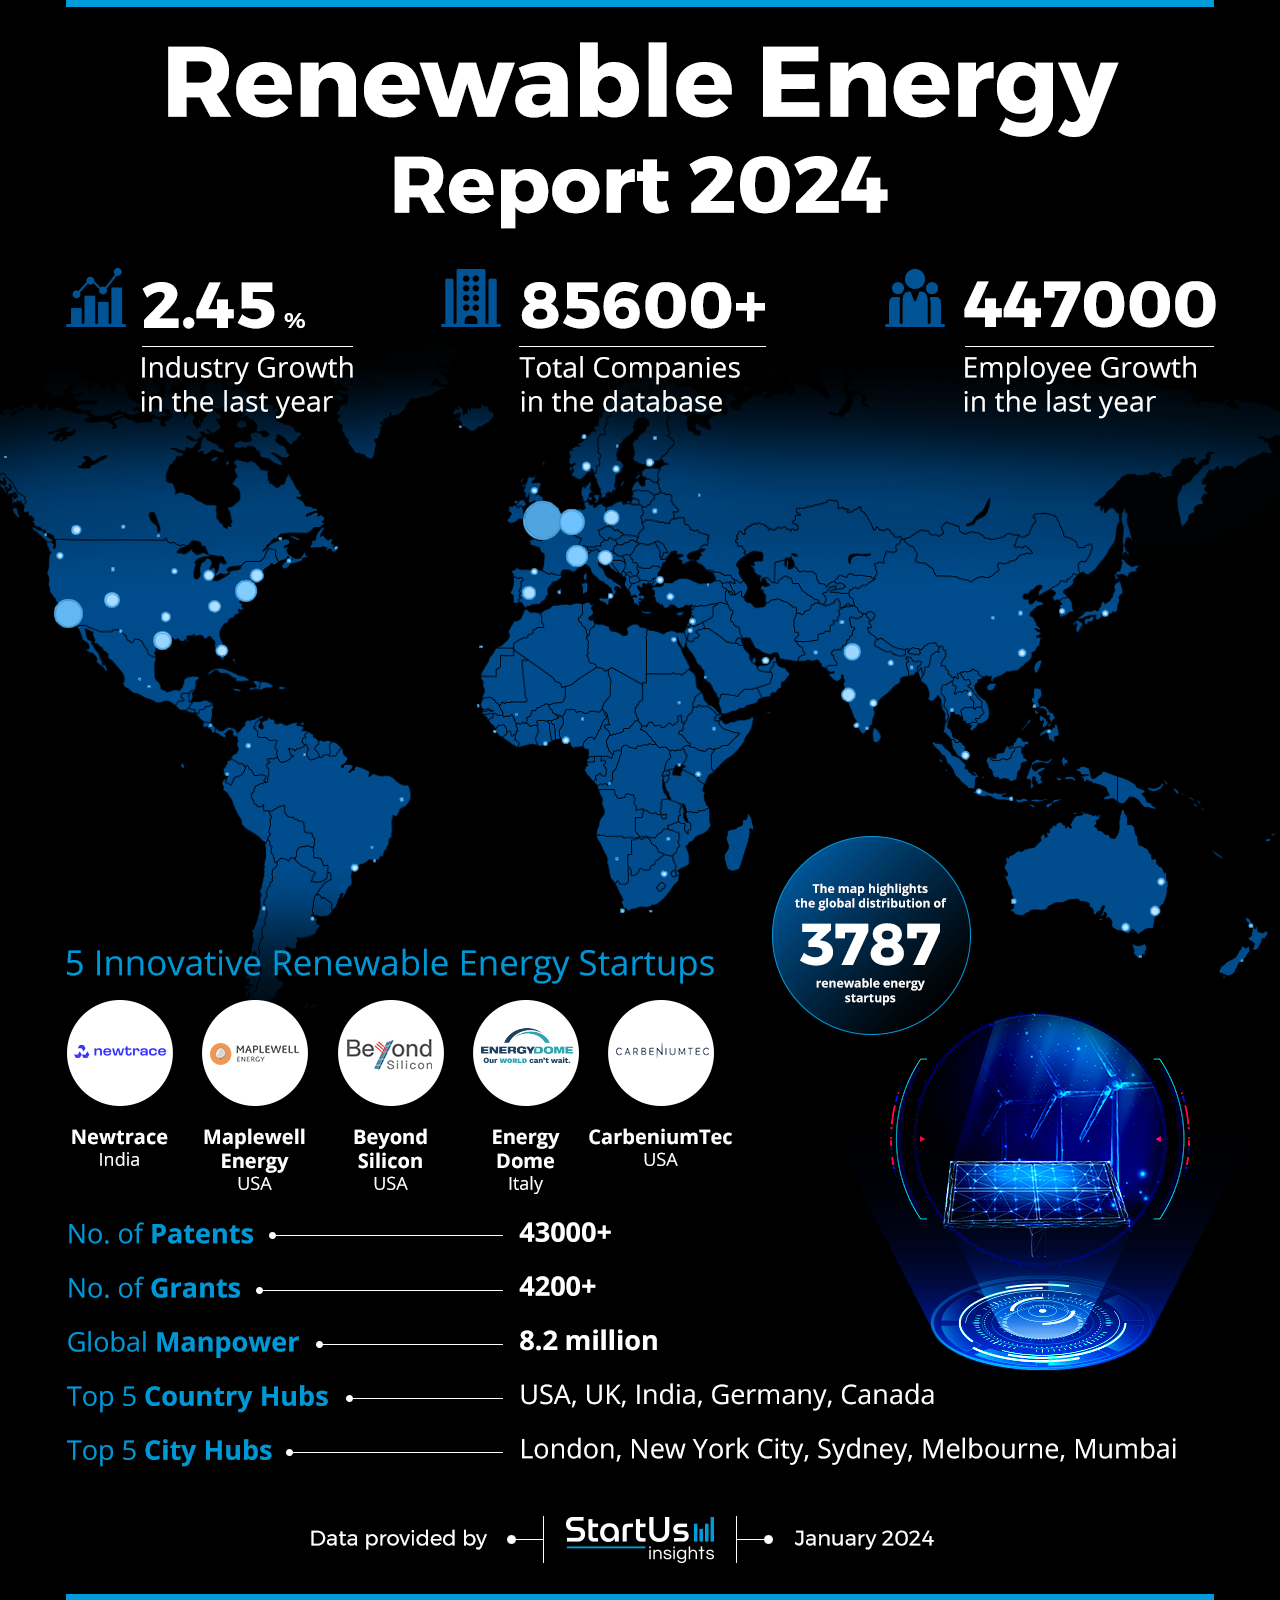 Renewable Energy Report 2024 | StartUs Insights